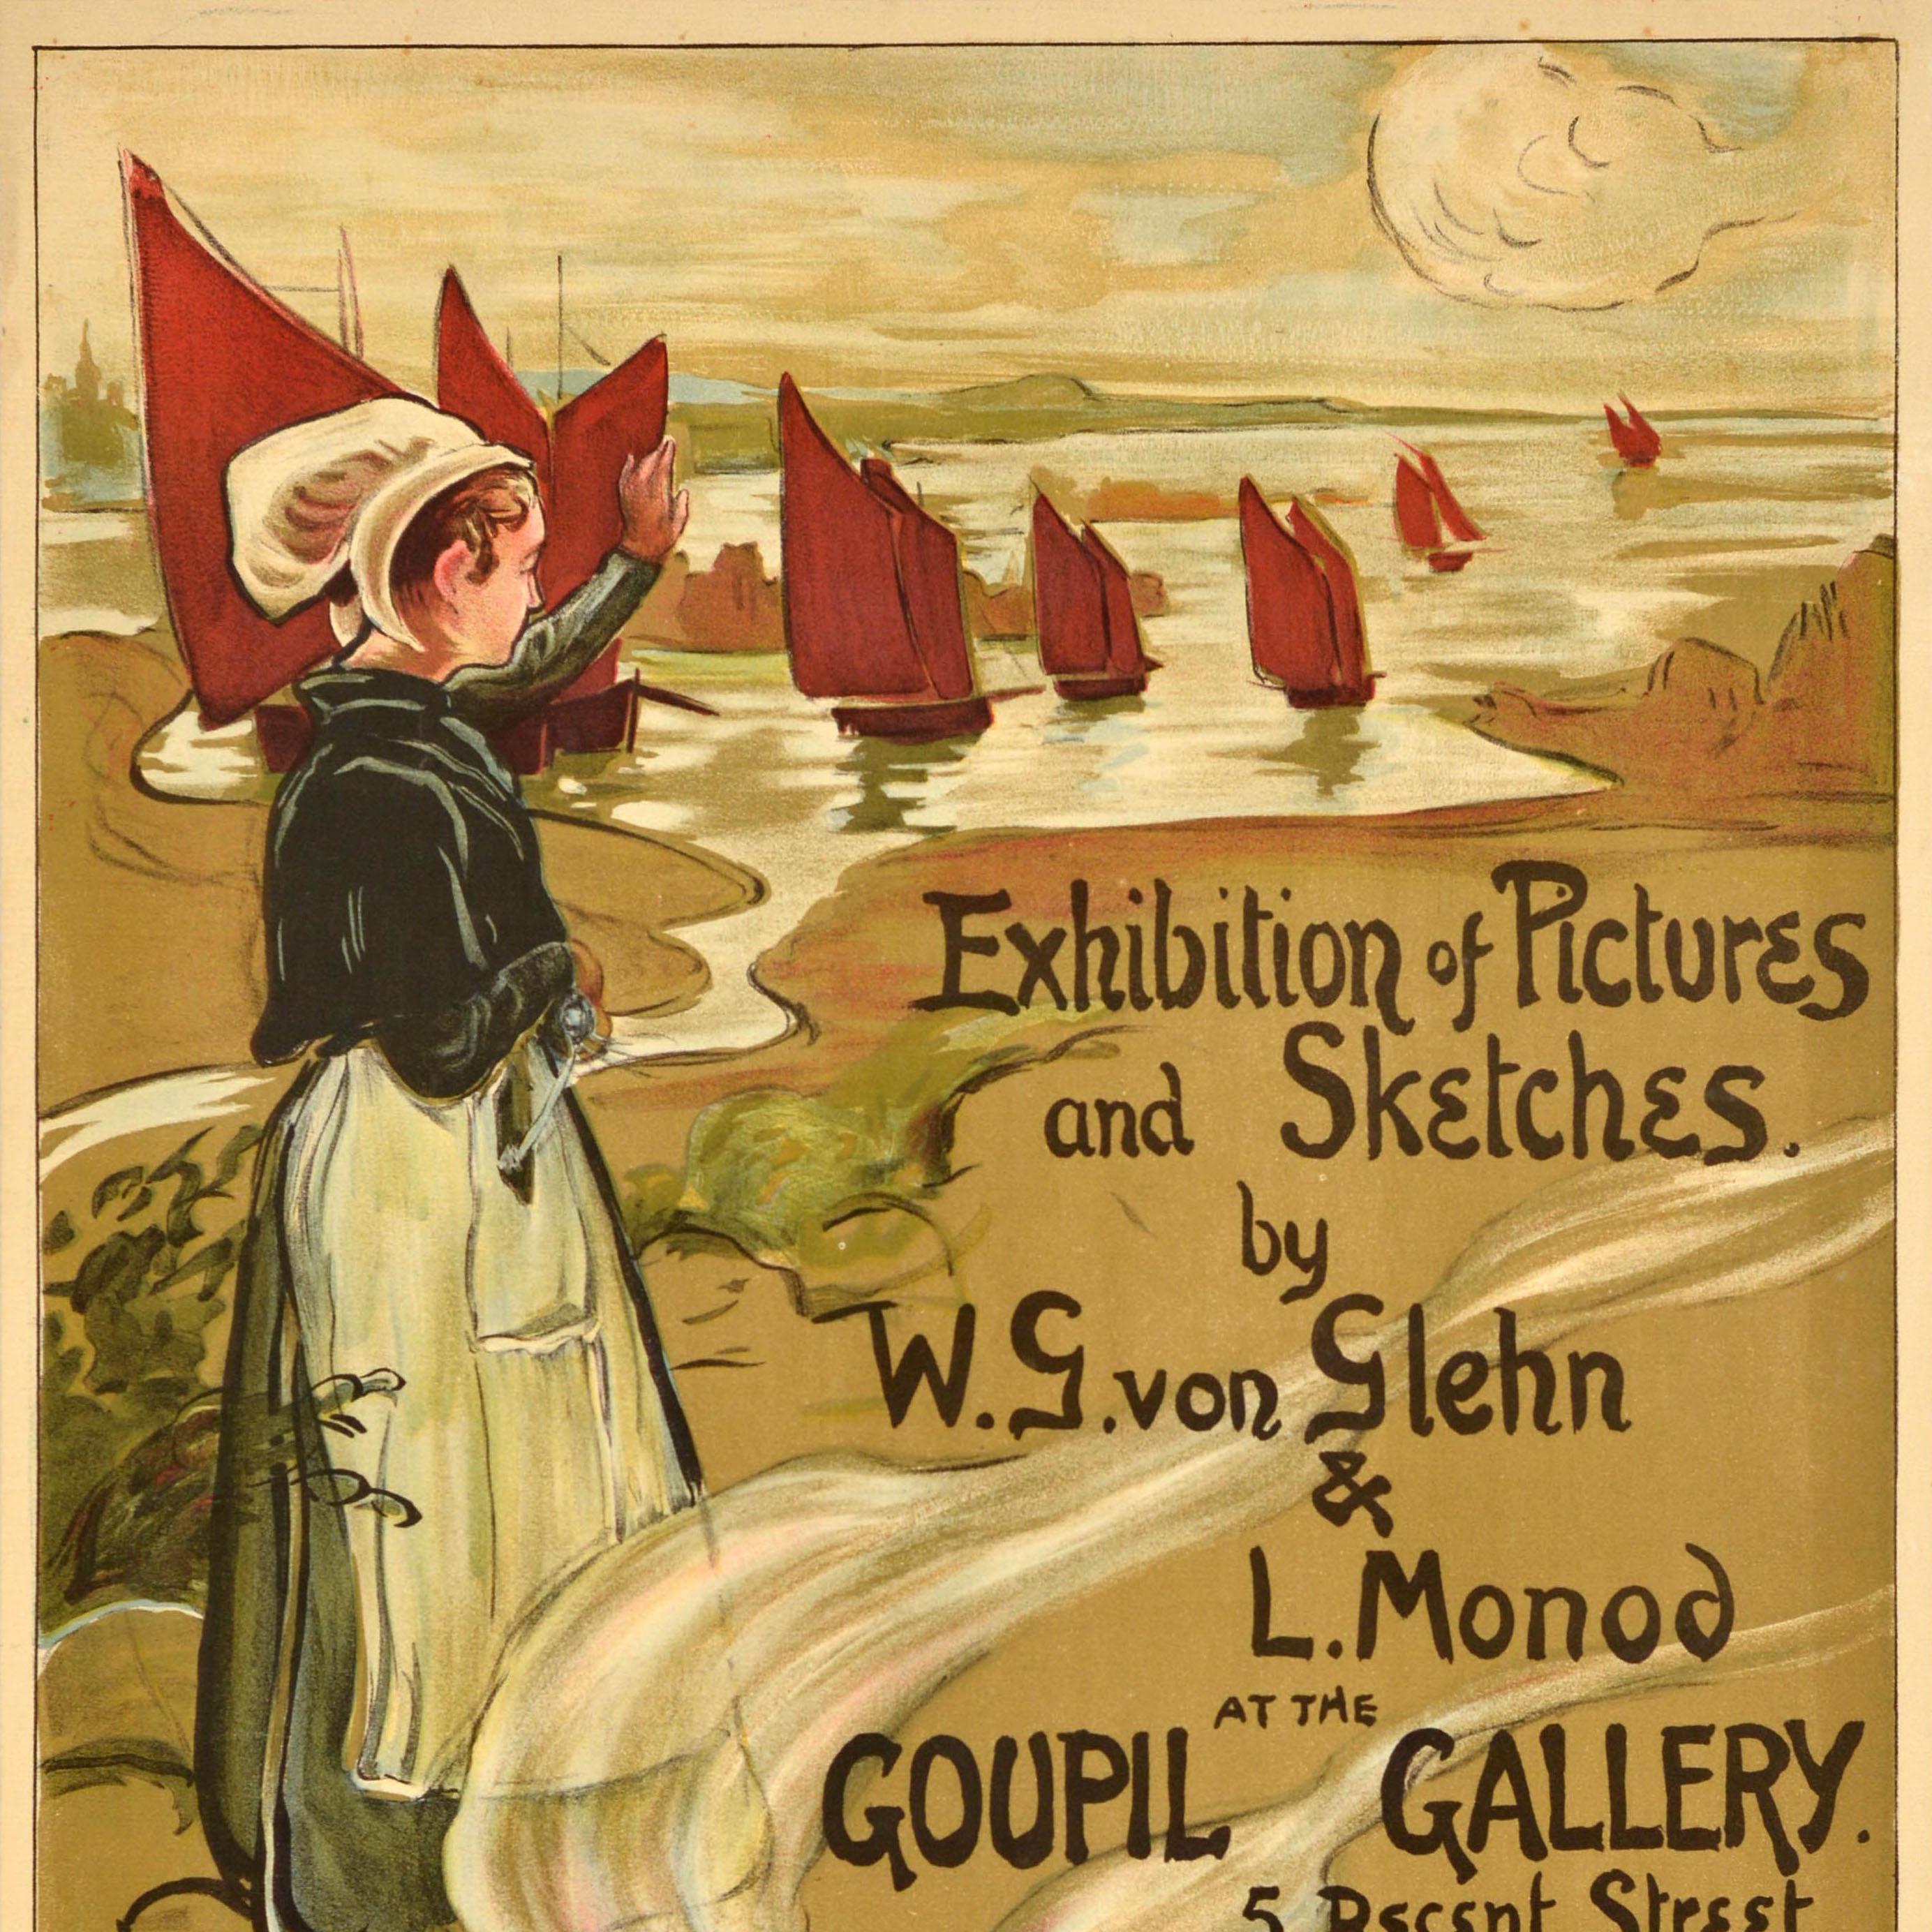 British Original Antique Advertising Poster Wilfrid De Glehn Artwork Exhibition Goupil For Sale